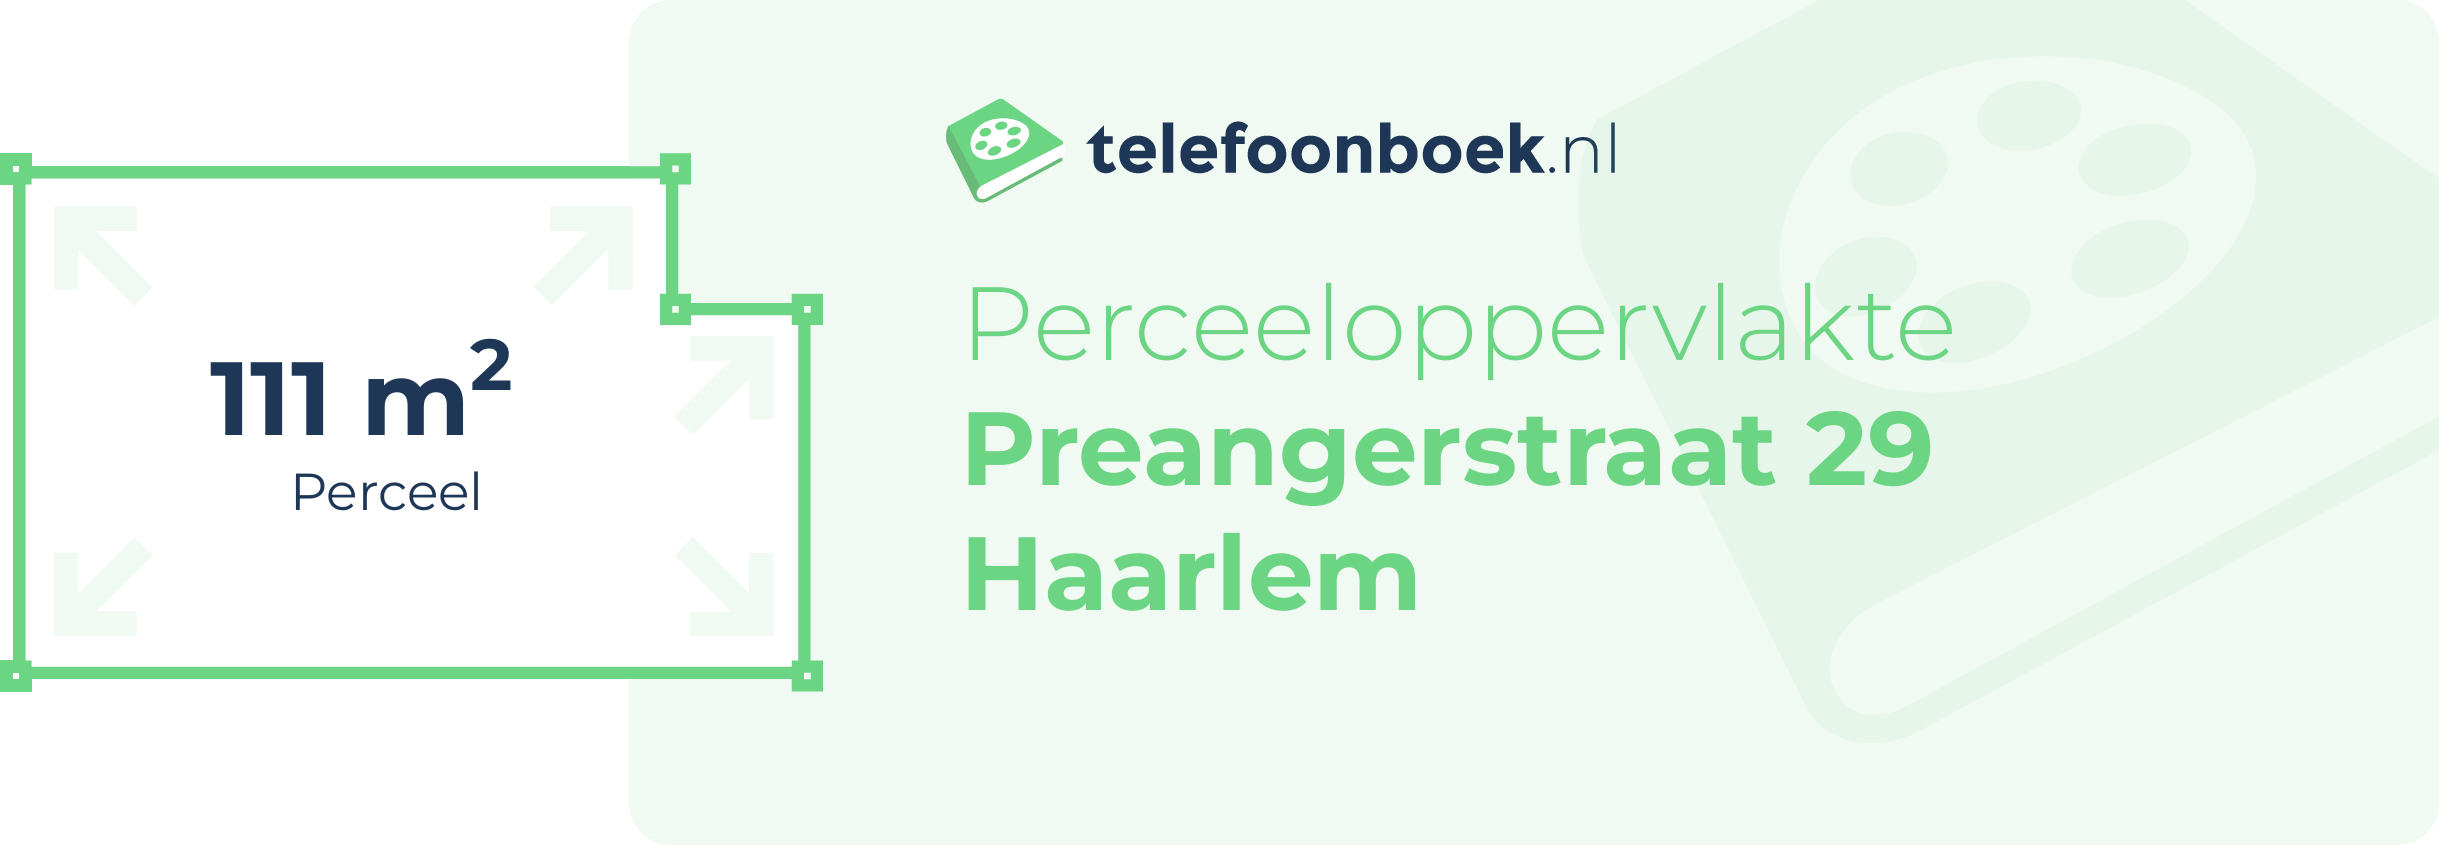 Perceeloppervlakte Preangerstraat 29 Haarlem